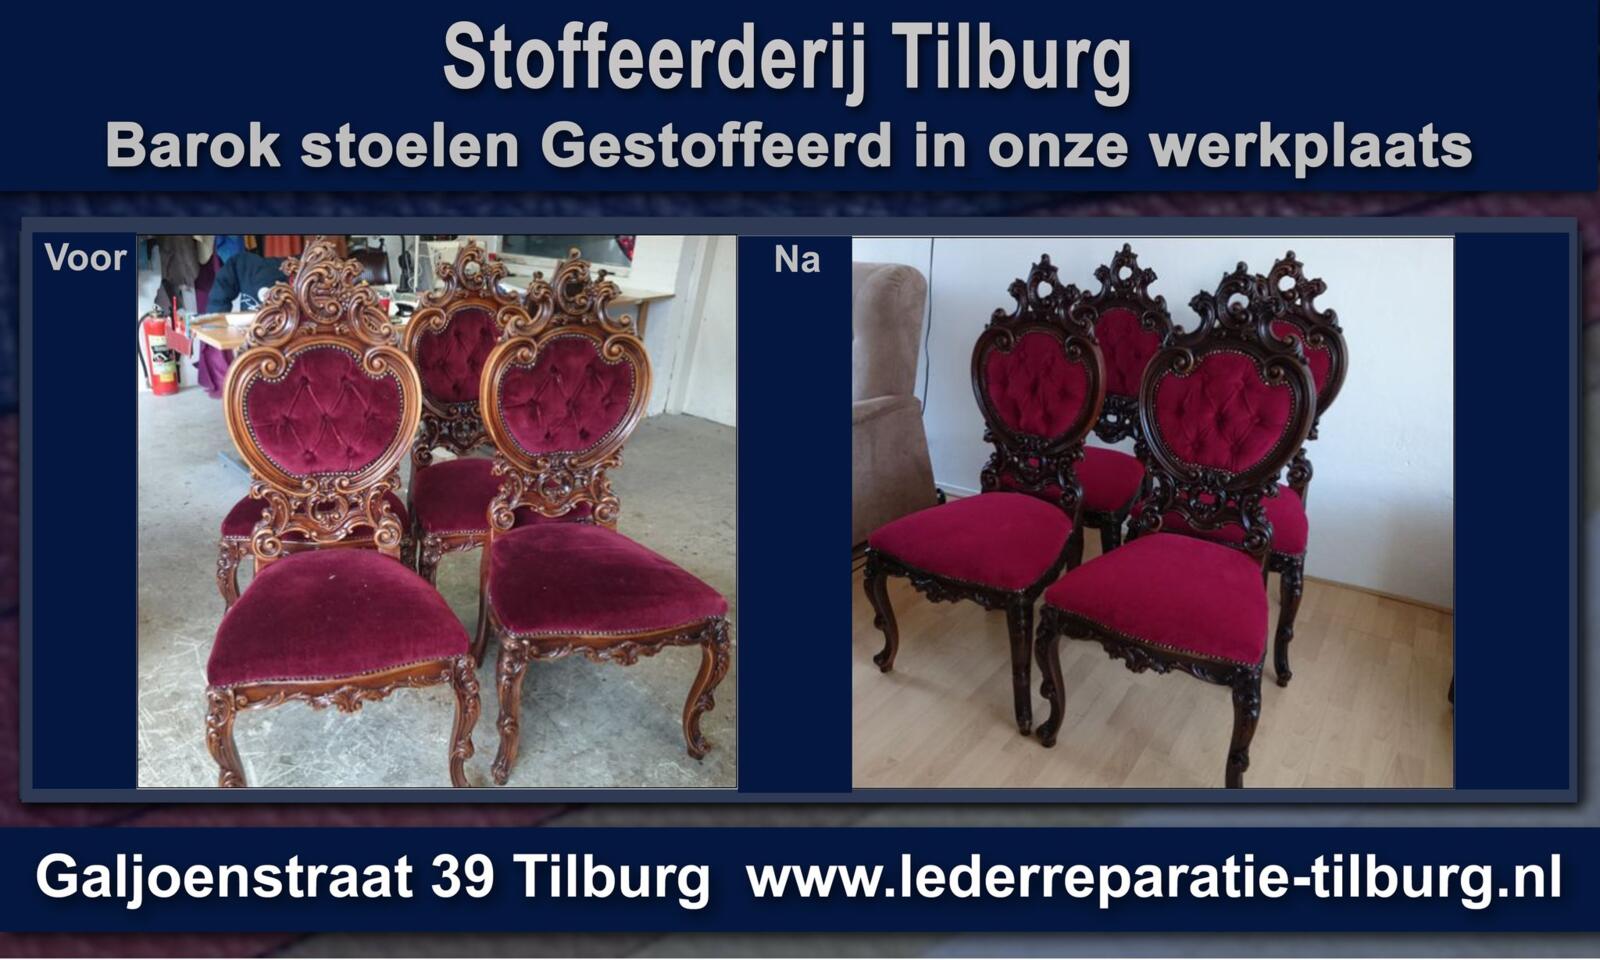 Barok Stoffeerderij Tilburg